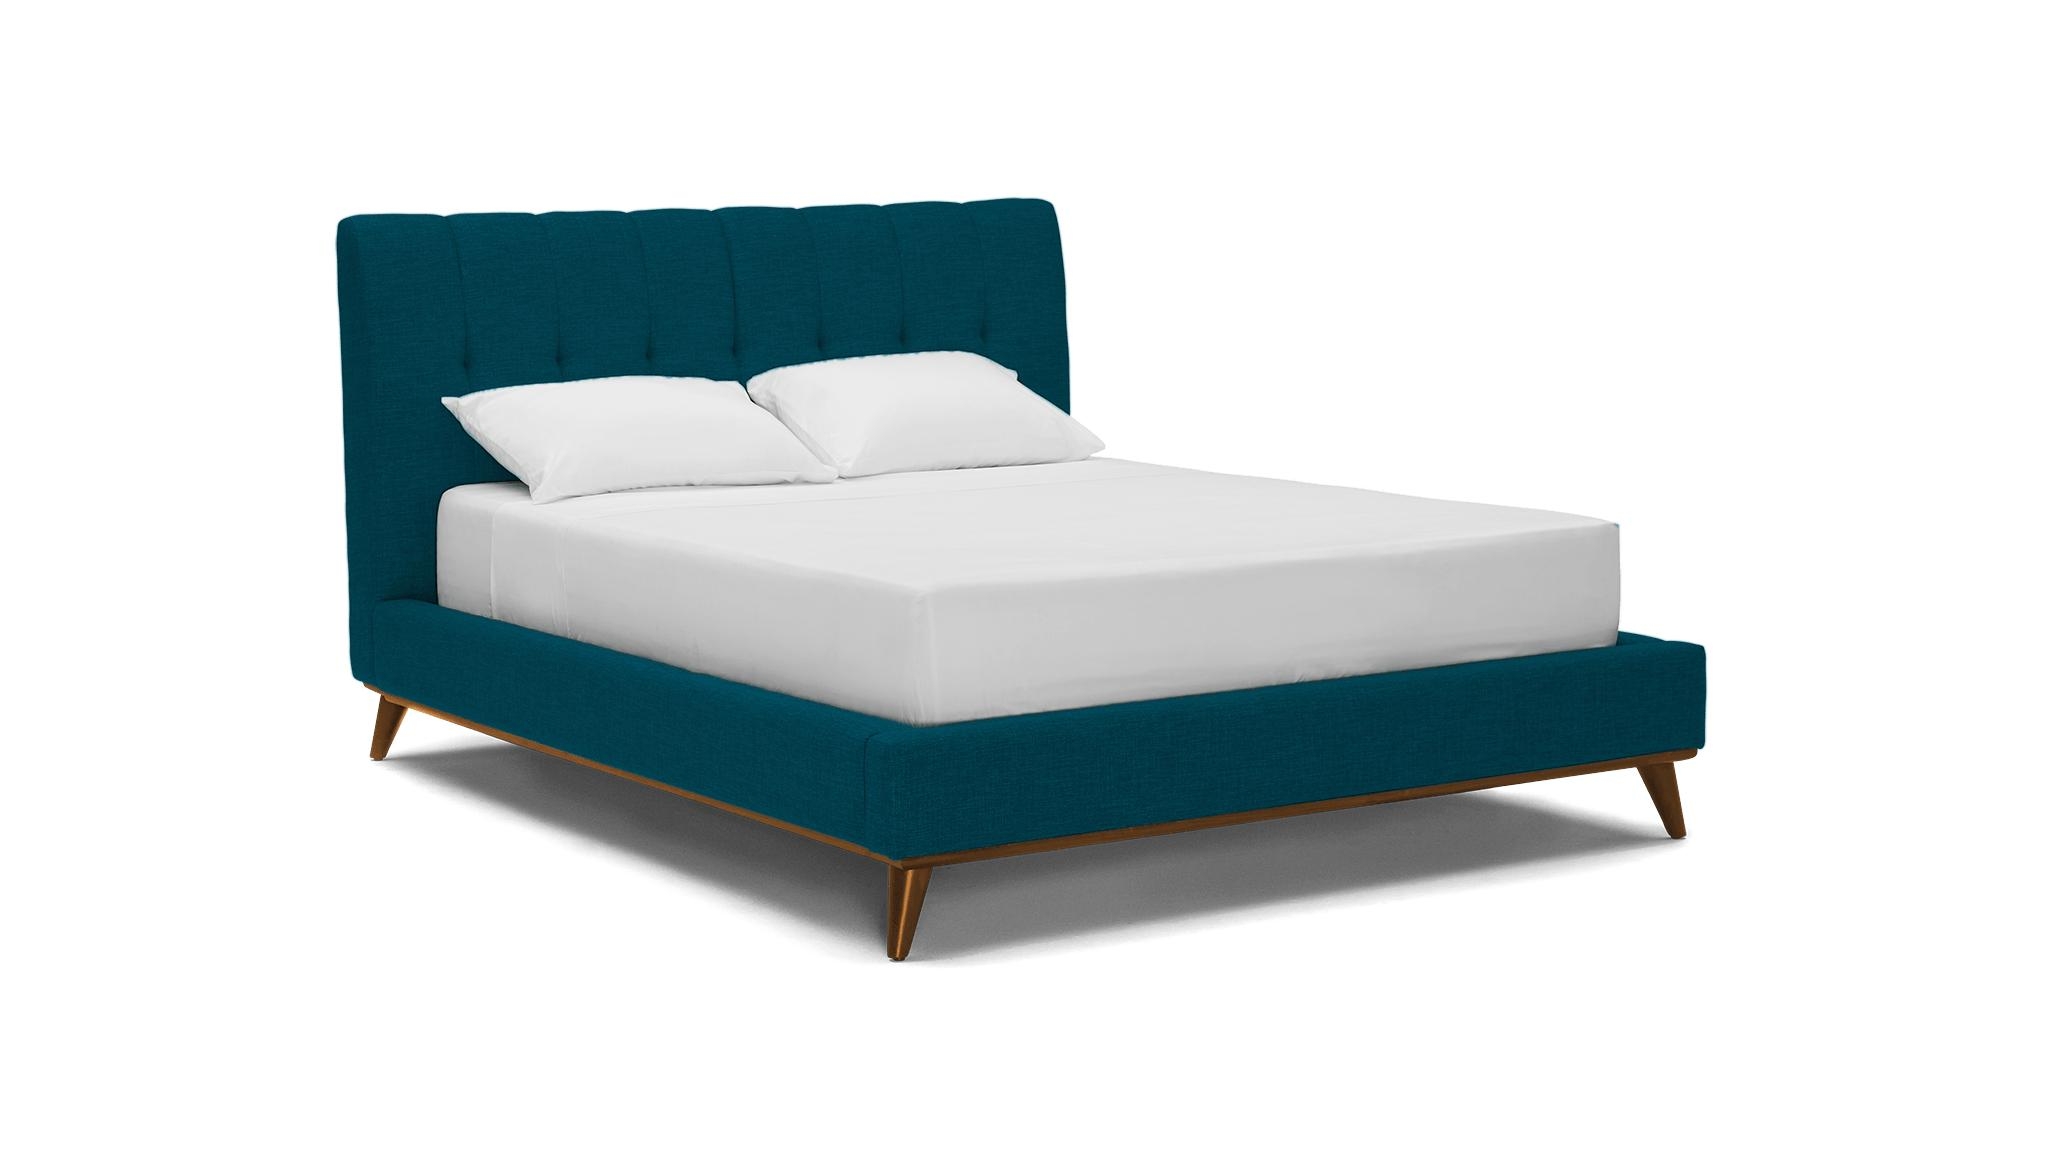 Blue Hughes Mid Century Modern Bed - Key Largo Zenith Teal - Mocha - Full - Image 1